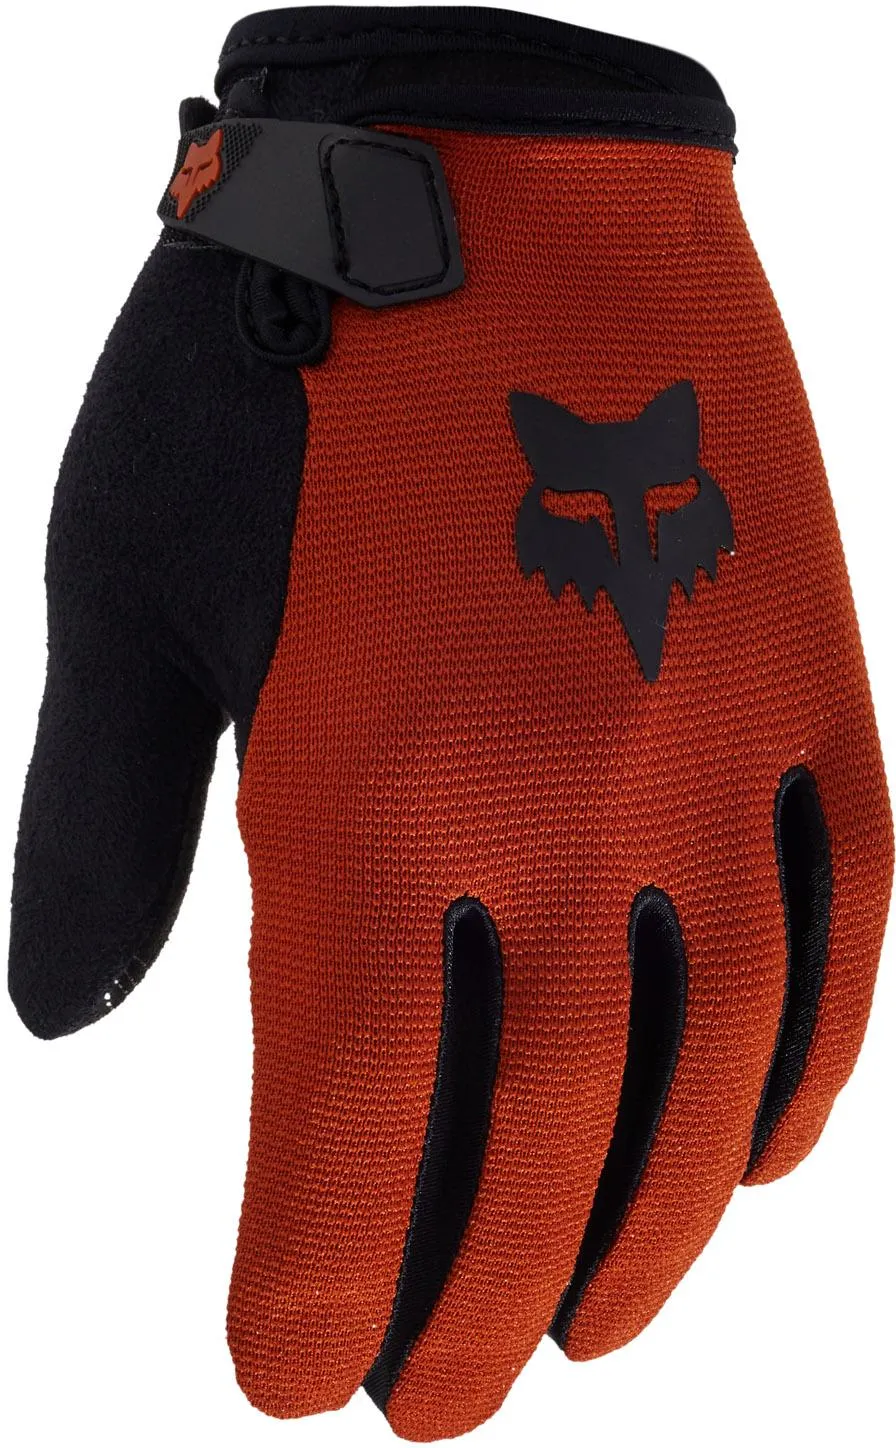  Youth Ranger Cycling Gloves, Burnt Orange